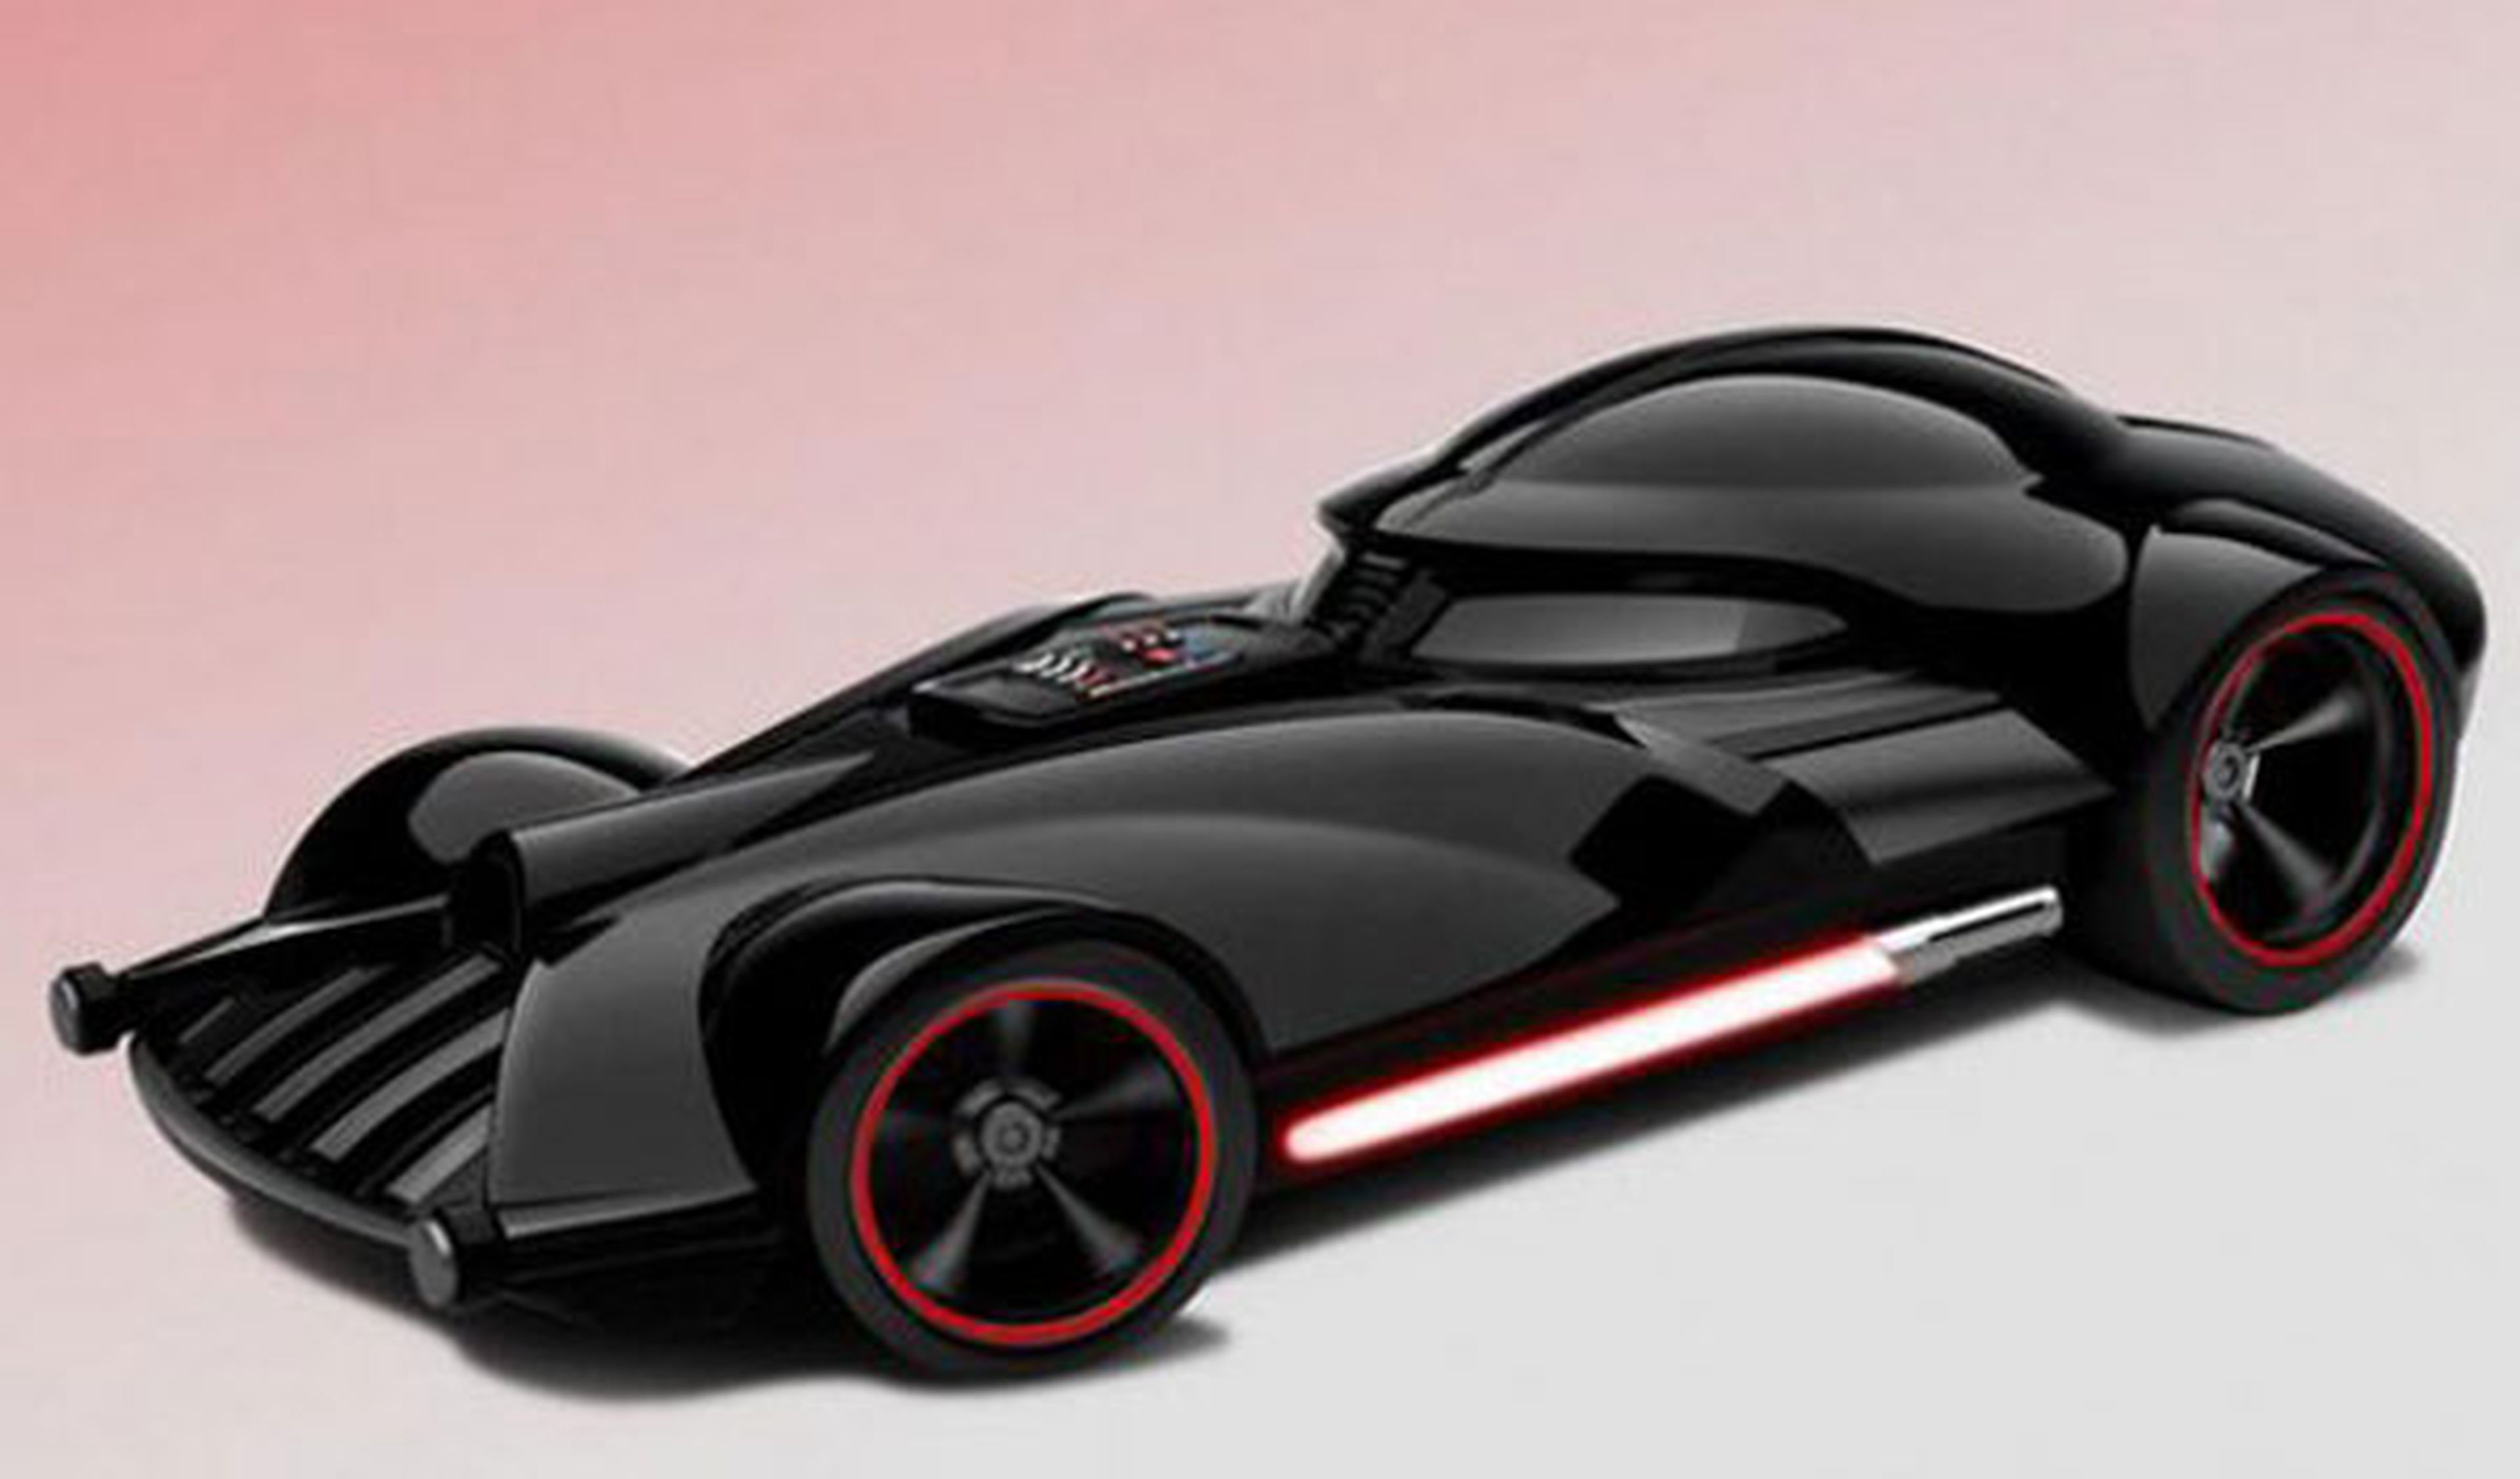 Darth Vader Hot Wheels